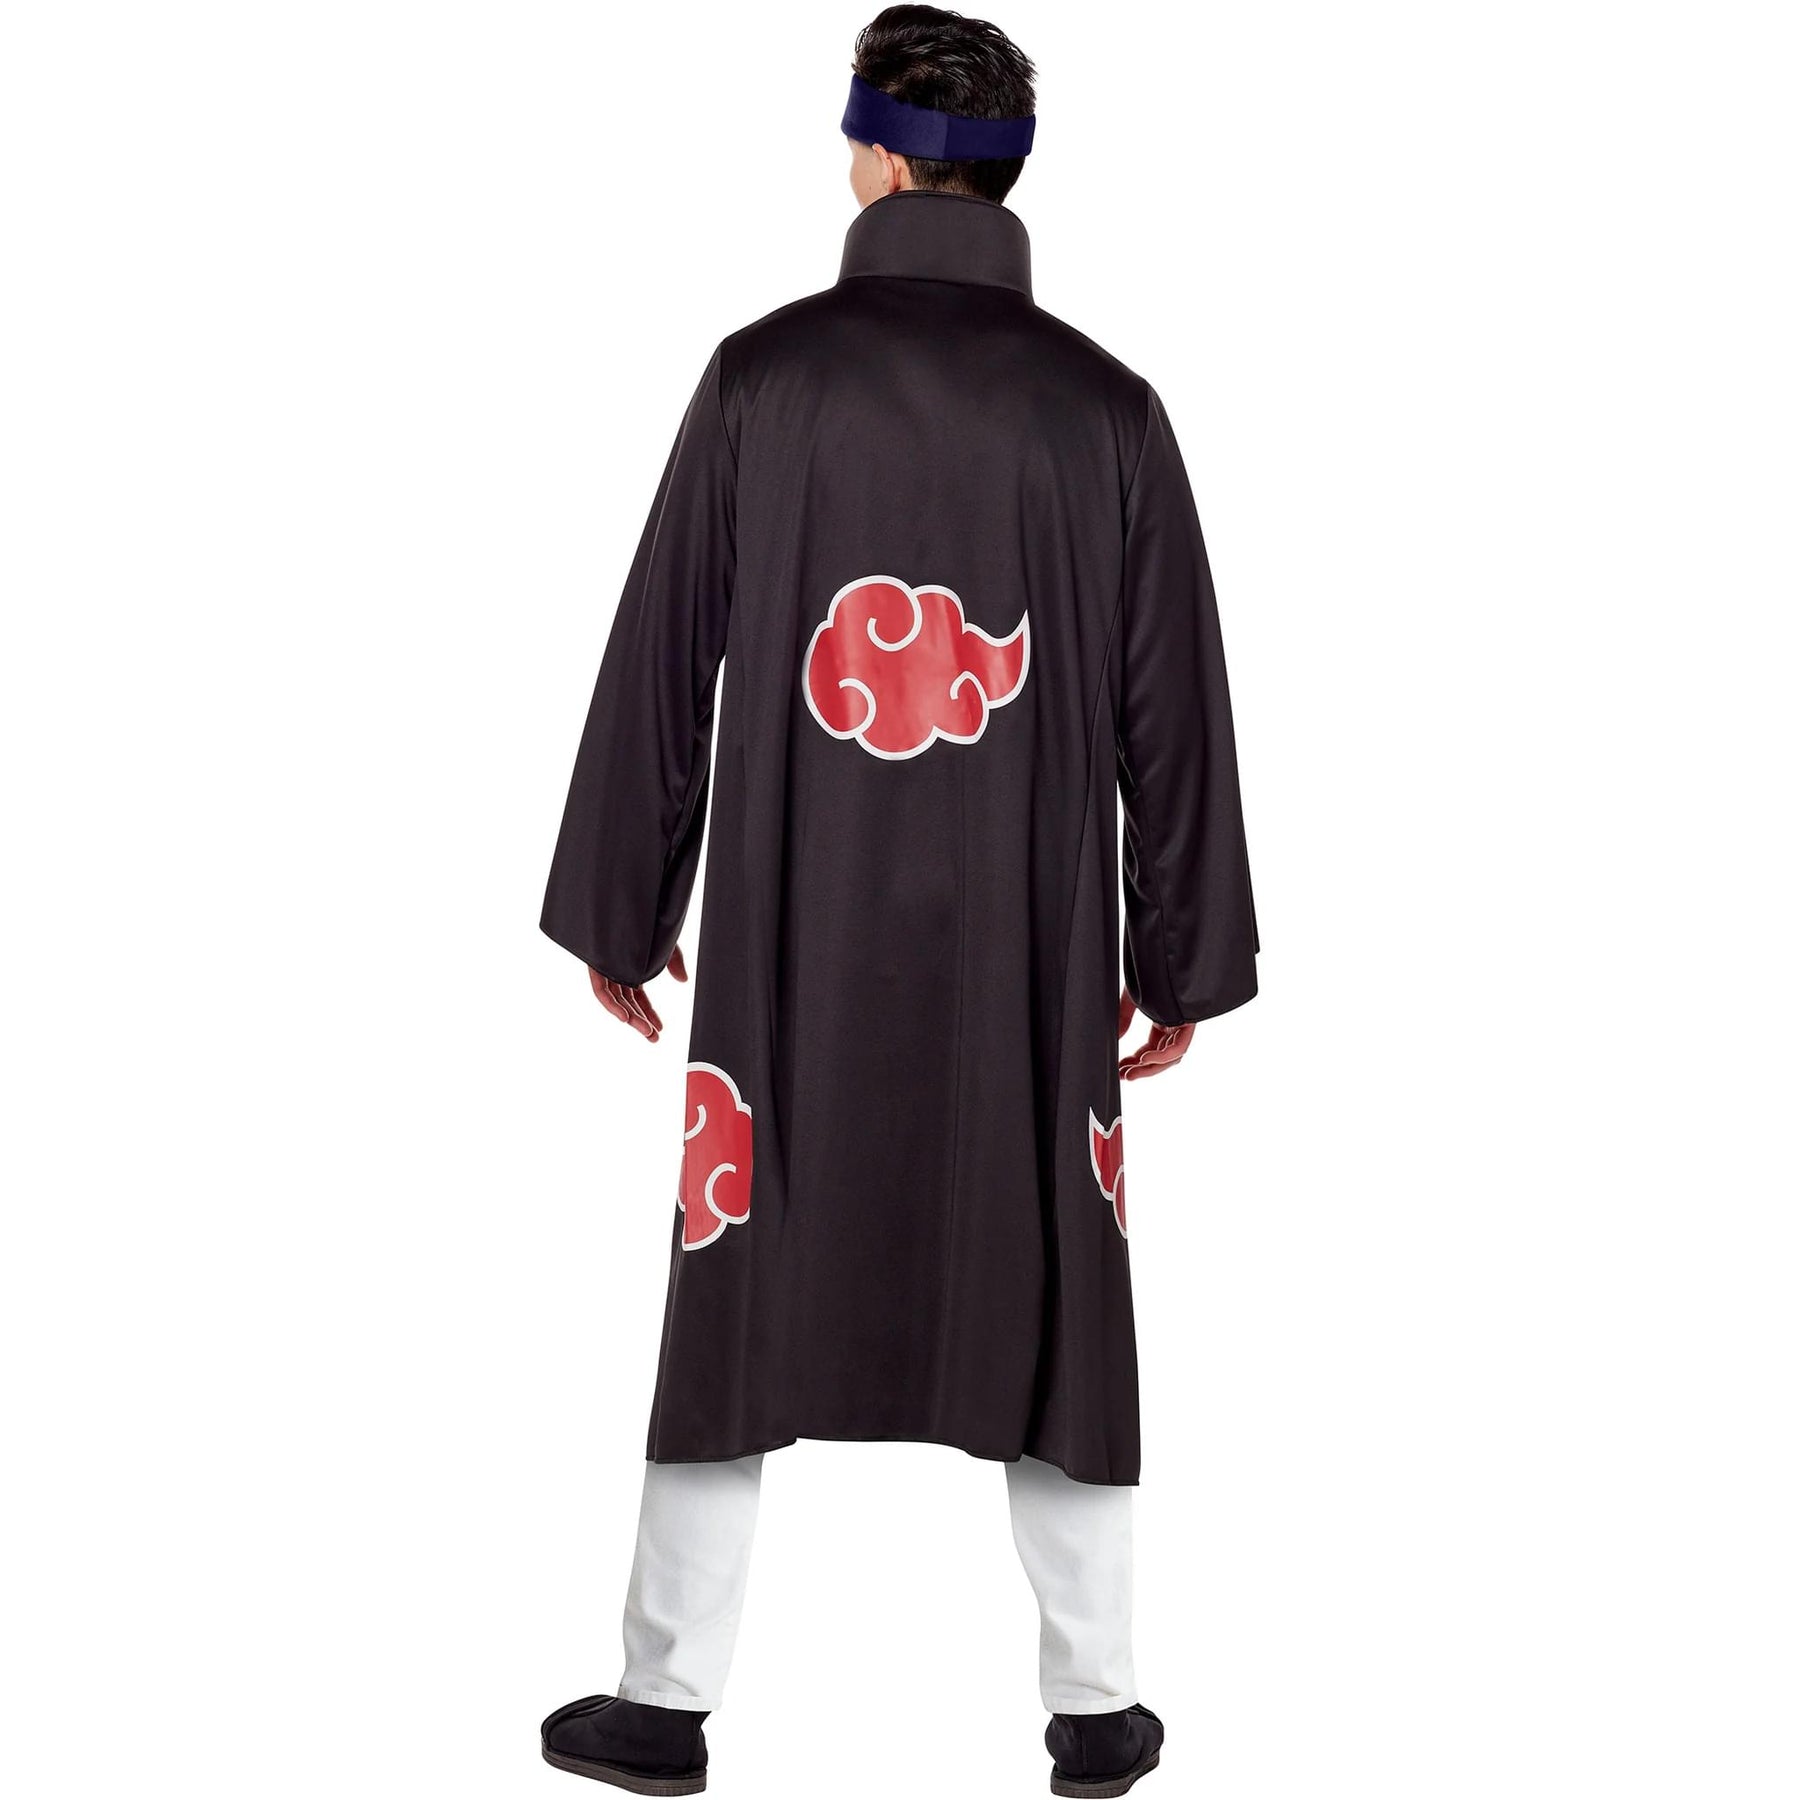 Naruto Akatsuki Adult Costume